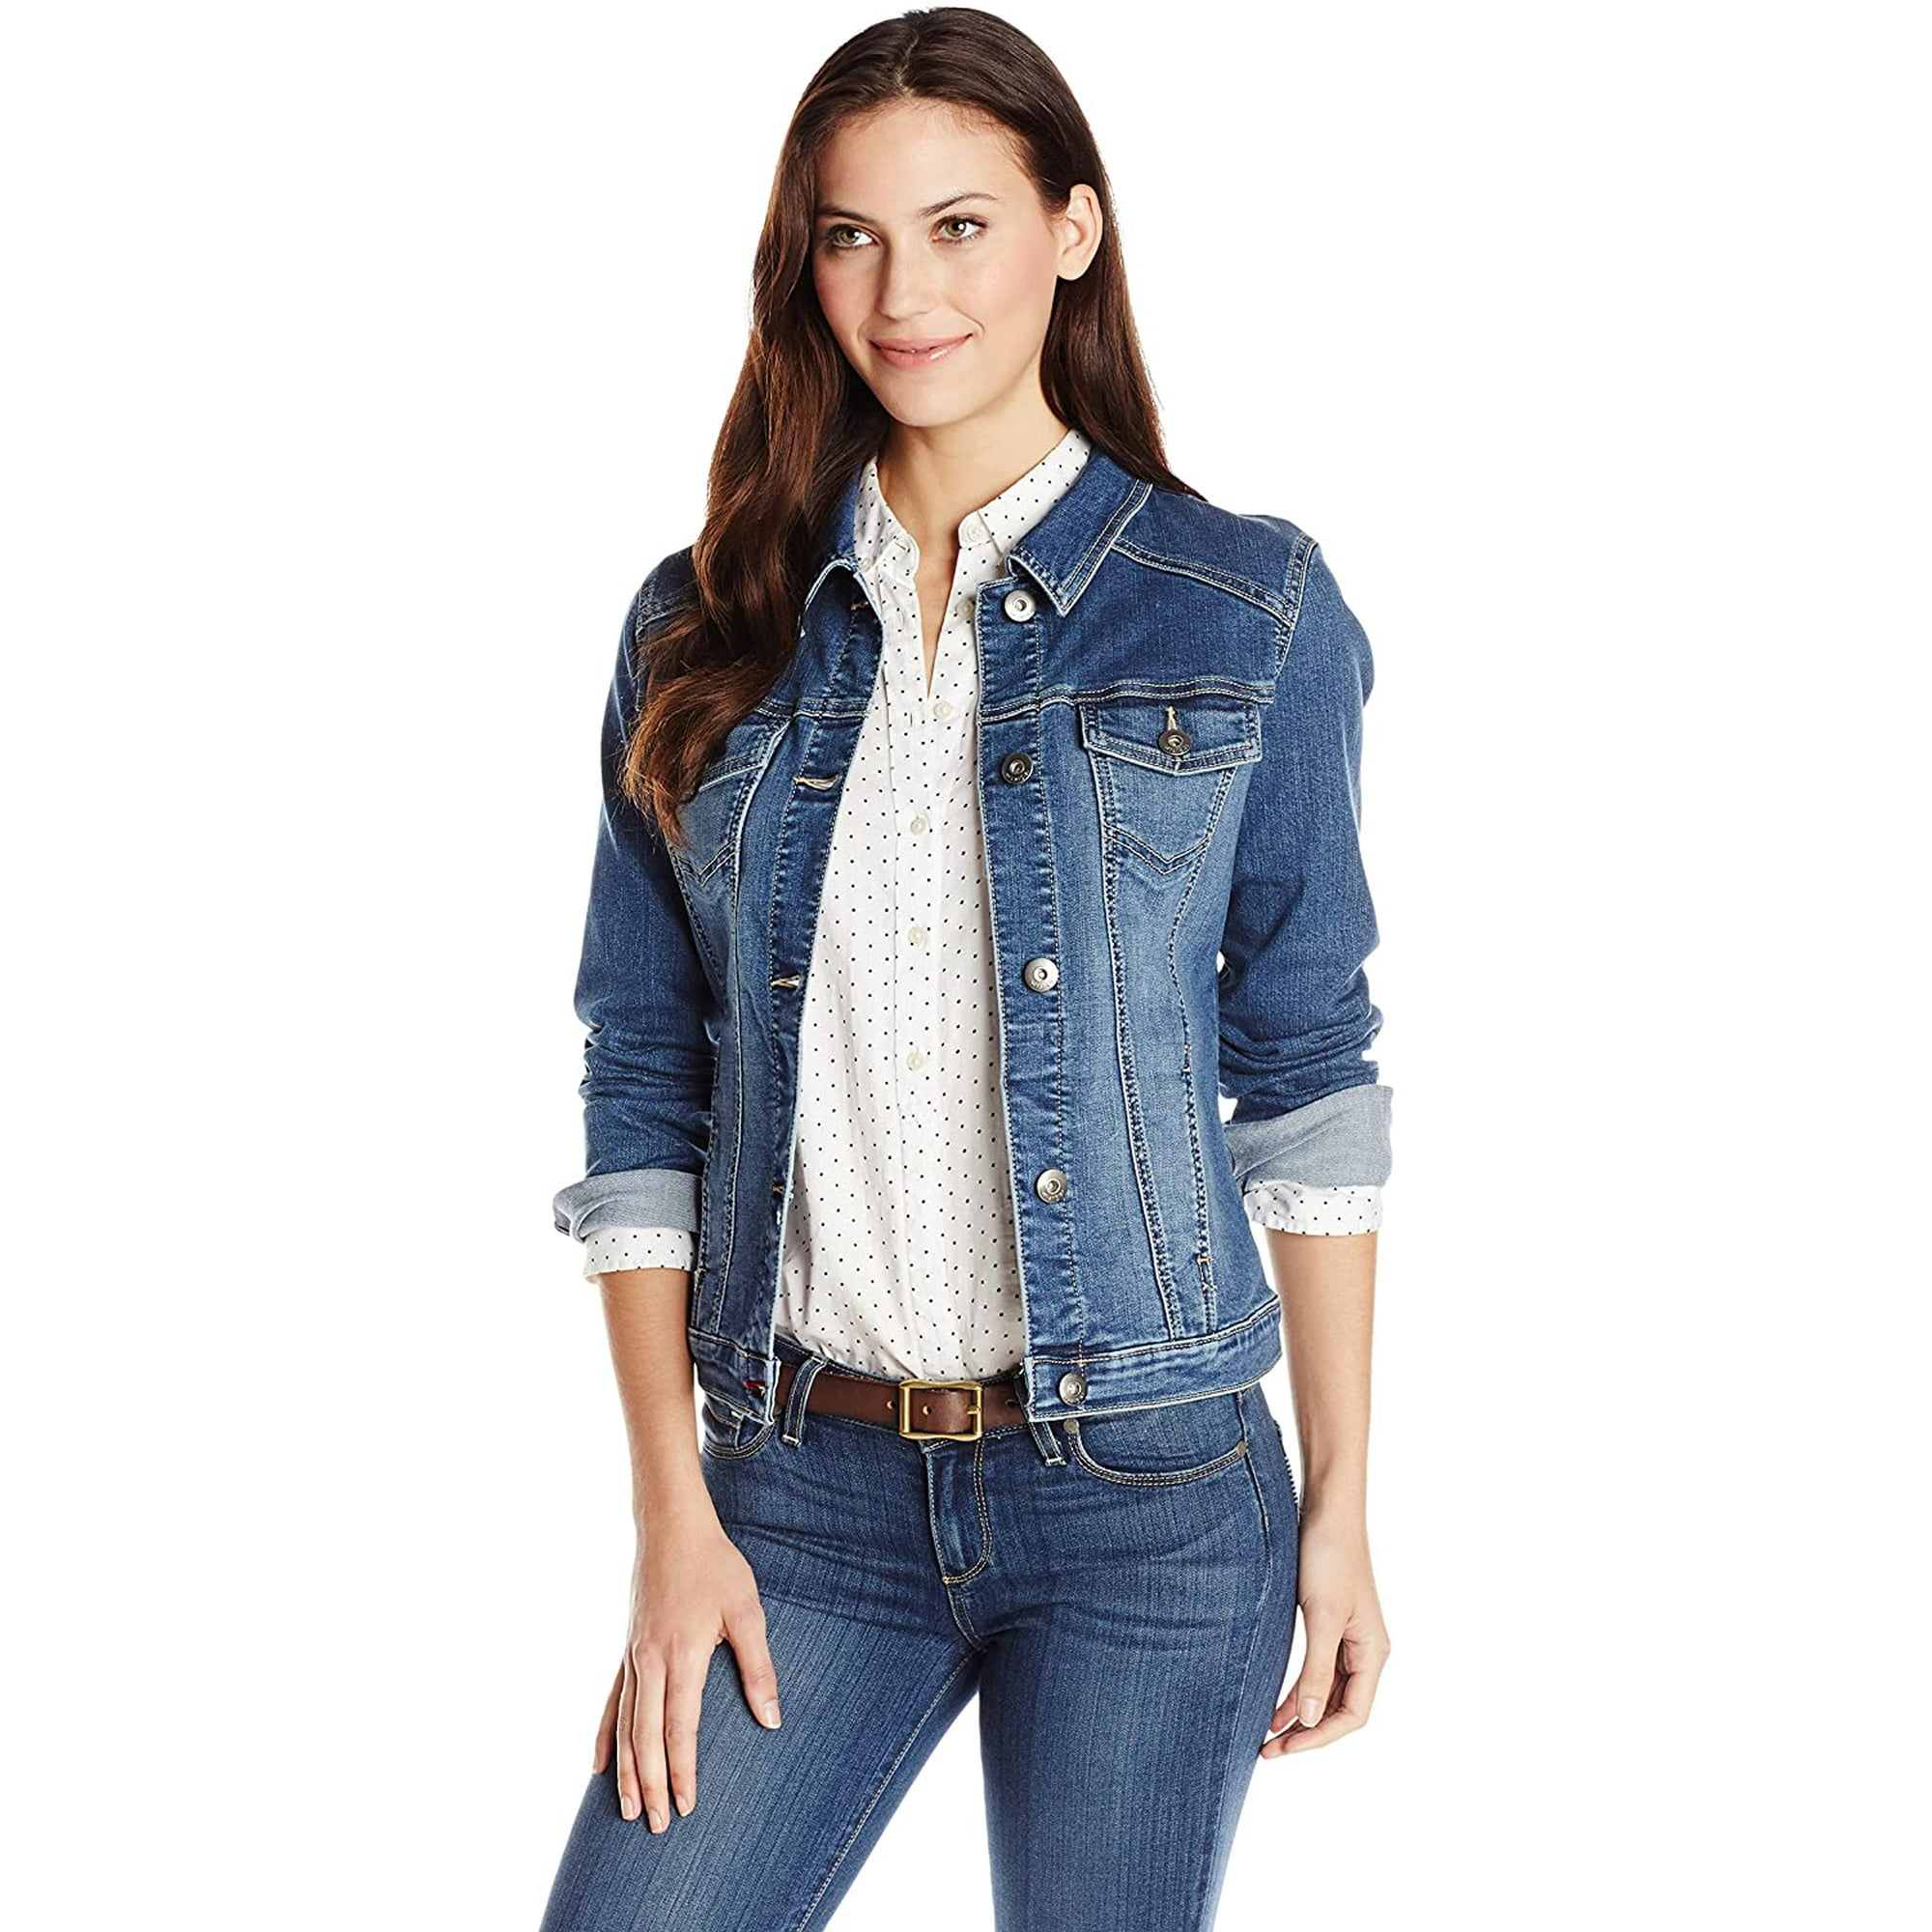 Wrangler Authentics Women's Denim Jacket, Weathered, Large | Walmart Canada